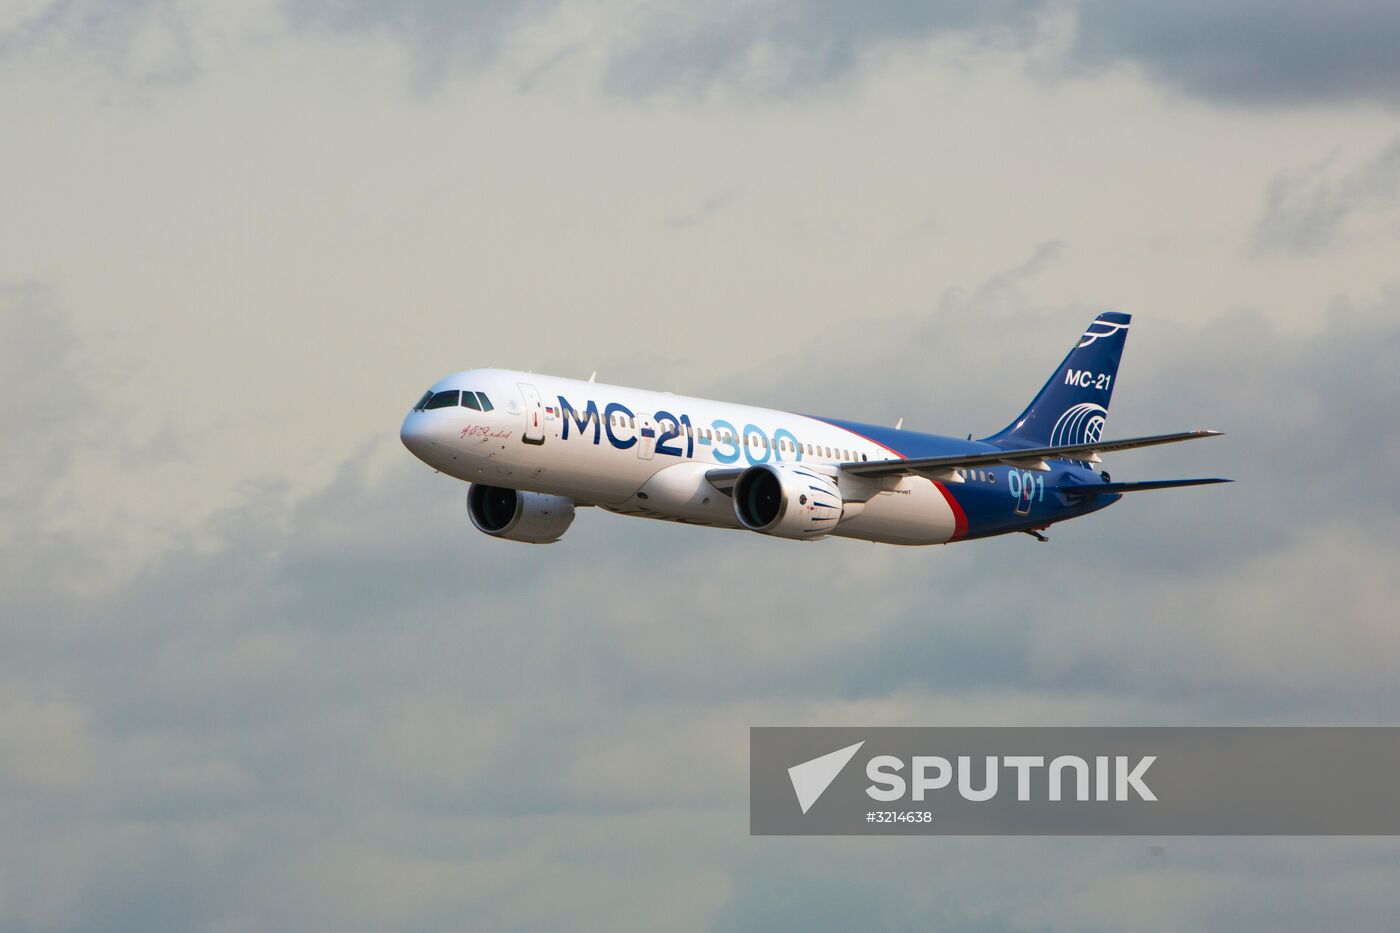 MC-21 aircraft performs its first flight from Irkutsk to Zhukovsky